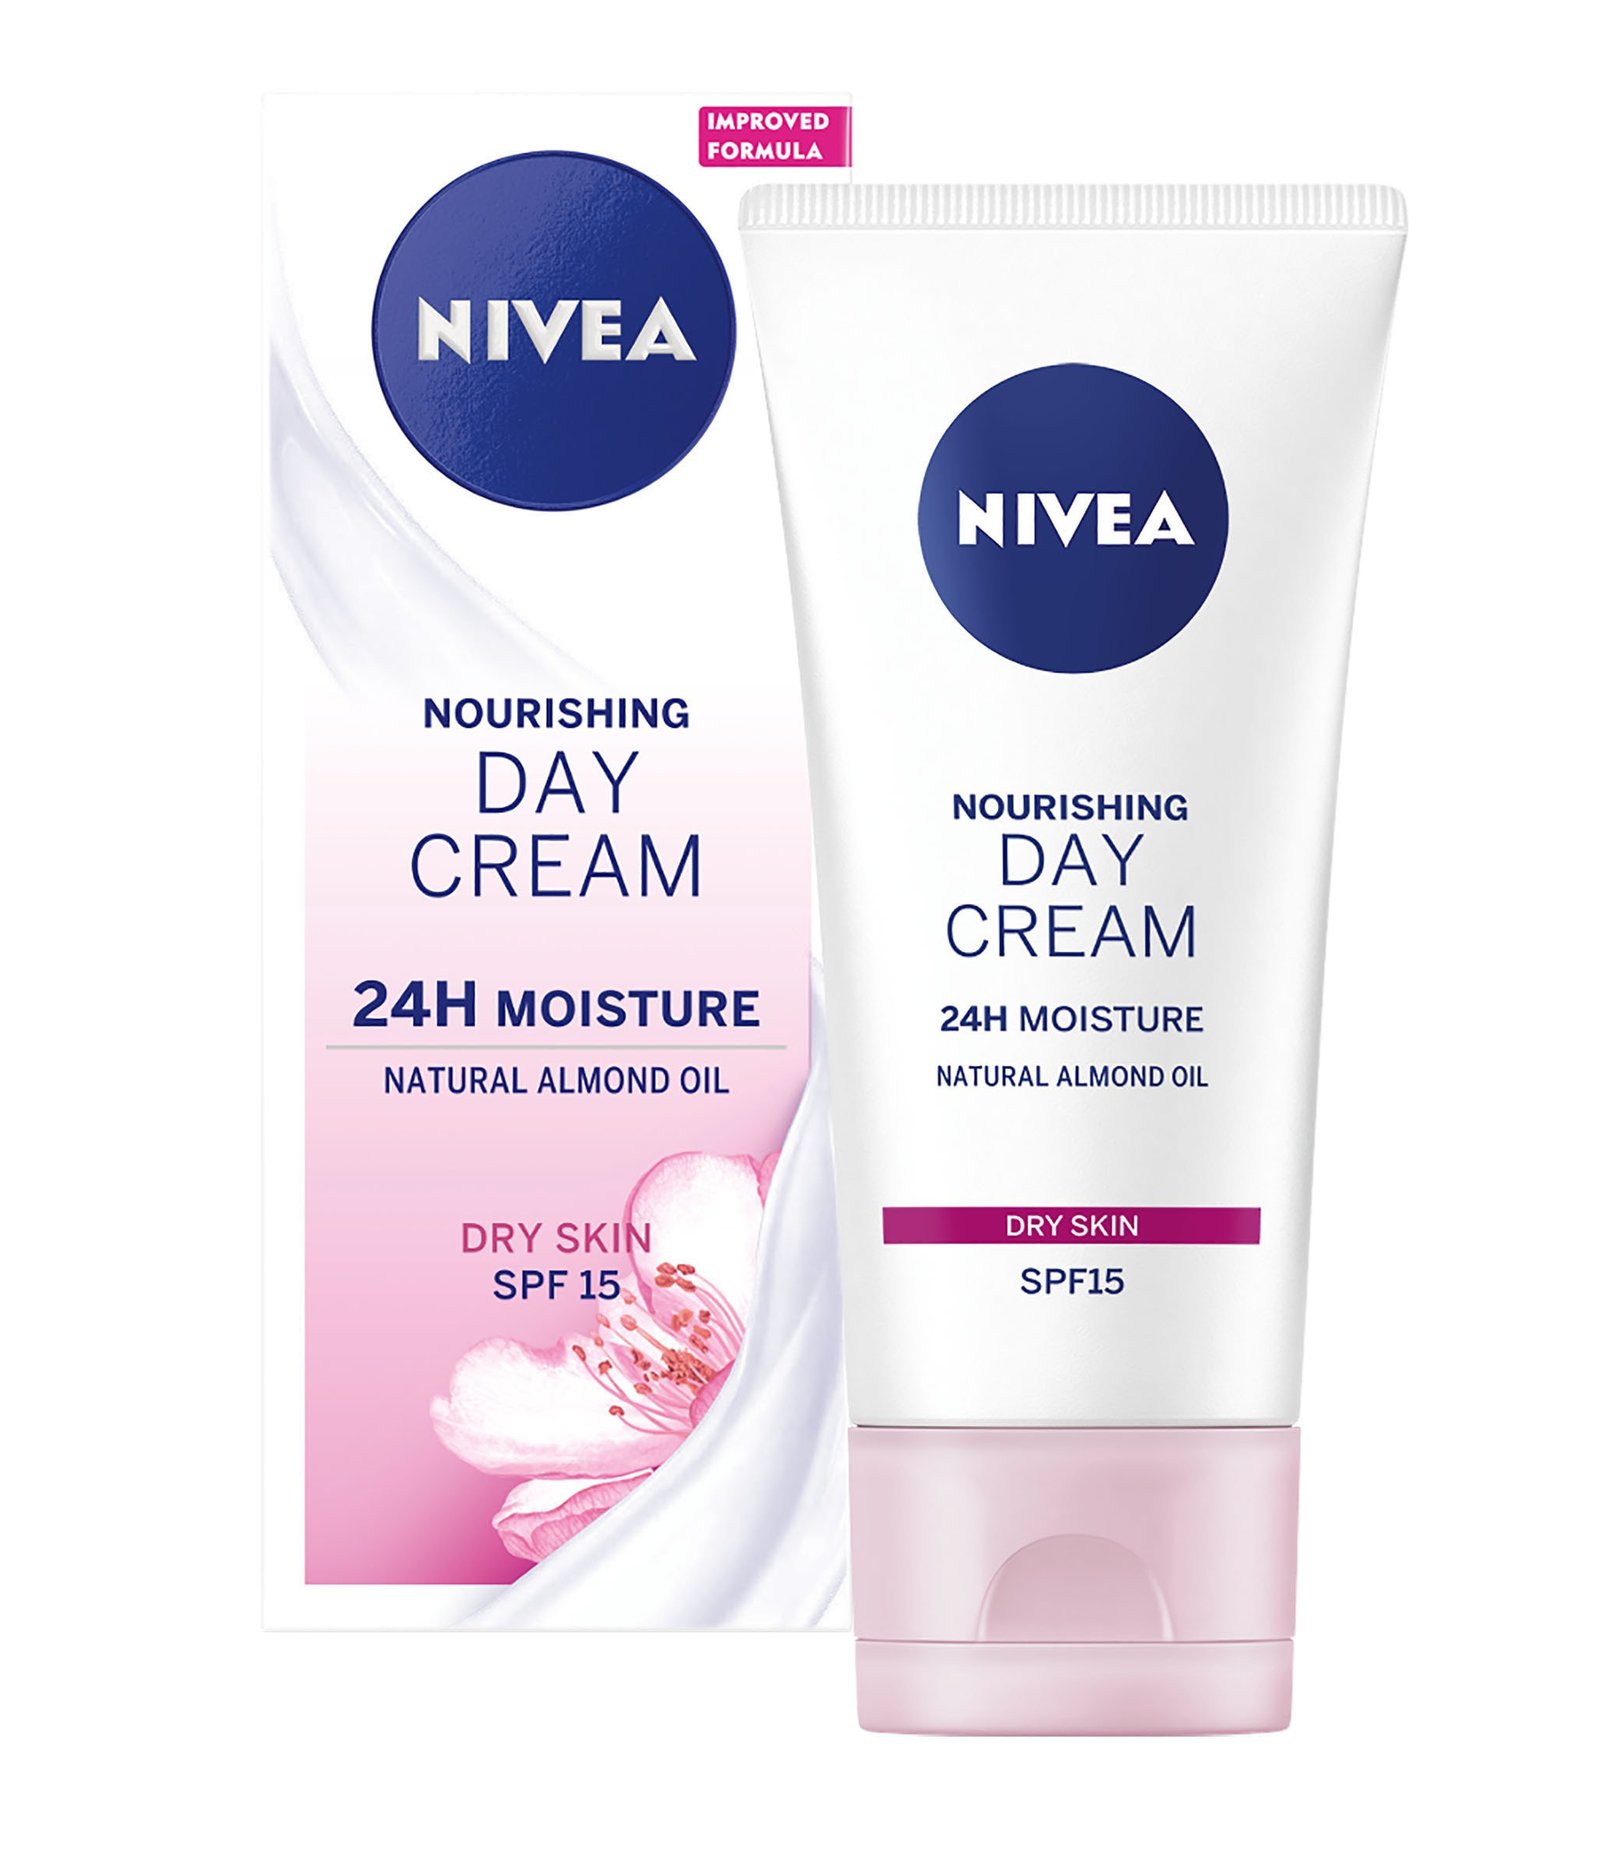 Nivea Nourishing Day Cream 24h Moisture SPF15 Dry Skin 50 ml